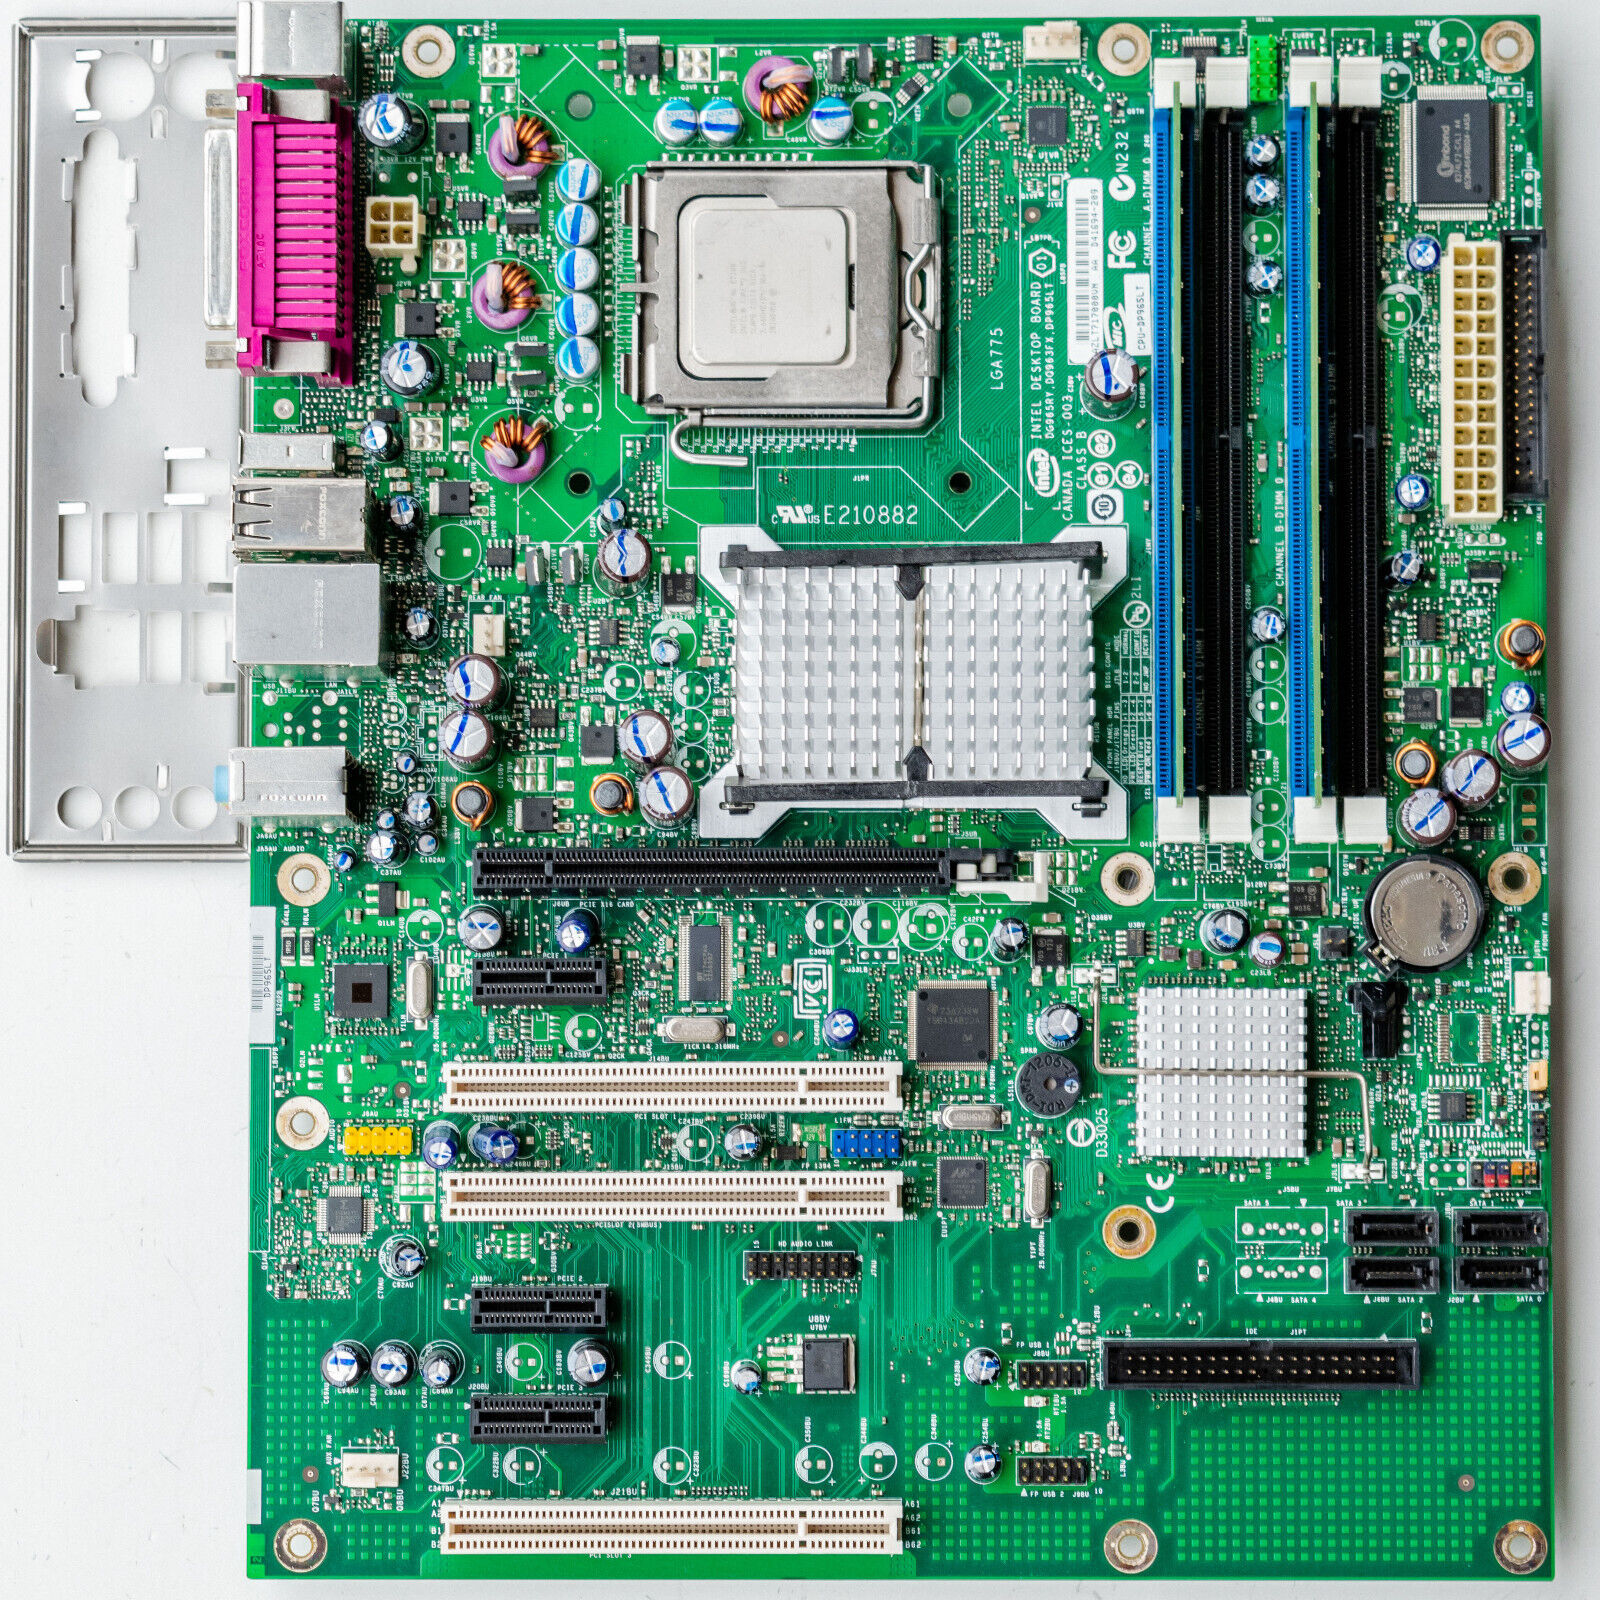 Intel DP965LT D41694-209 LGA775 Motherboard ATX DDR2 UPDATED BIOS 45nm E7300